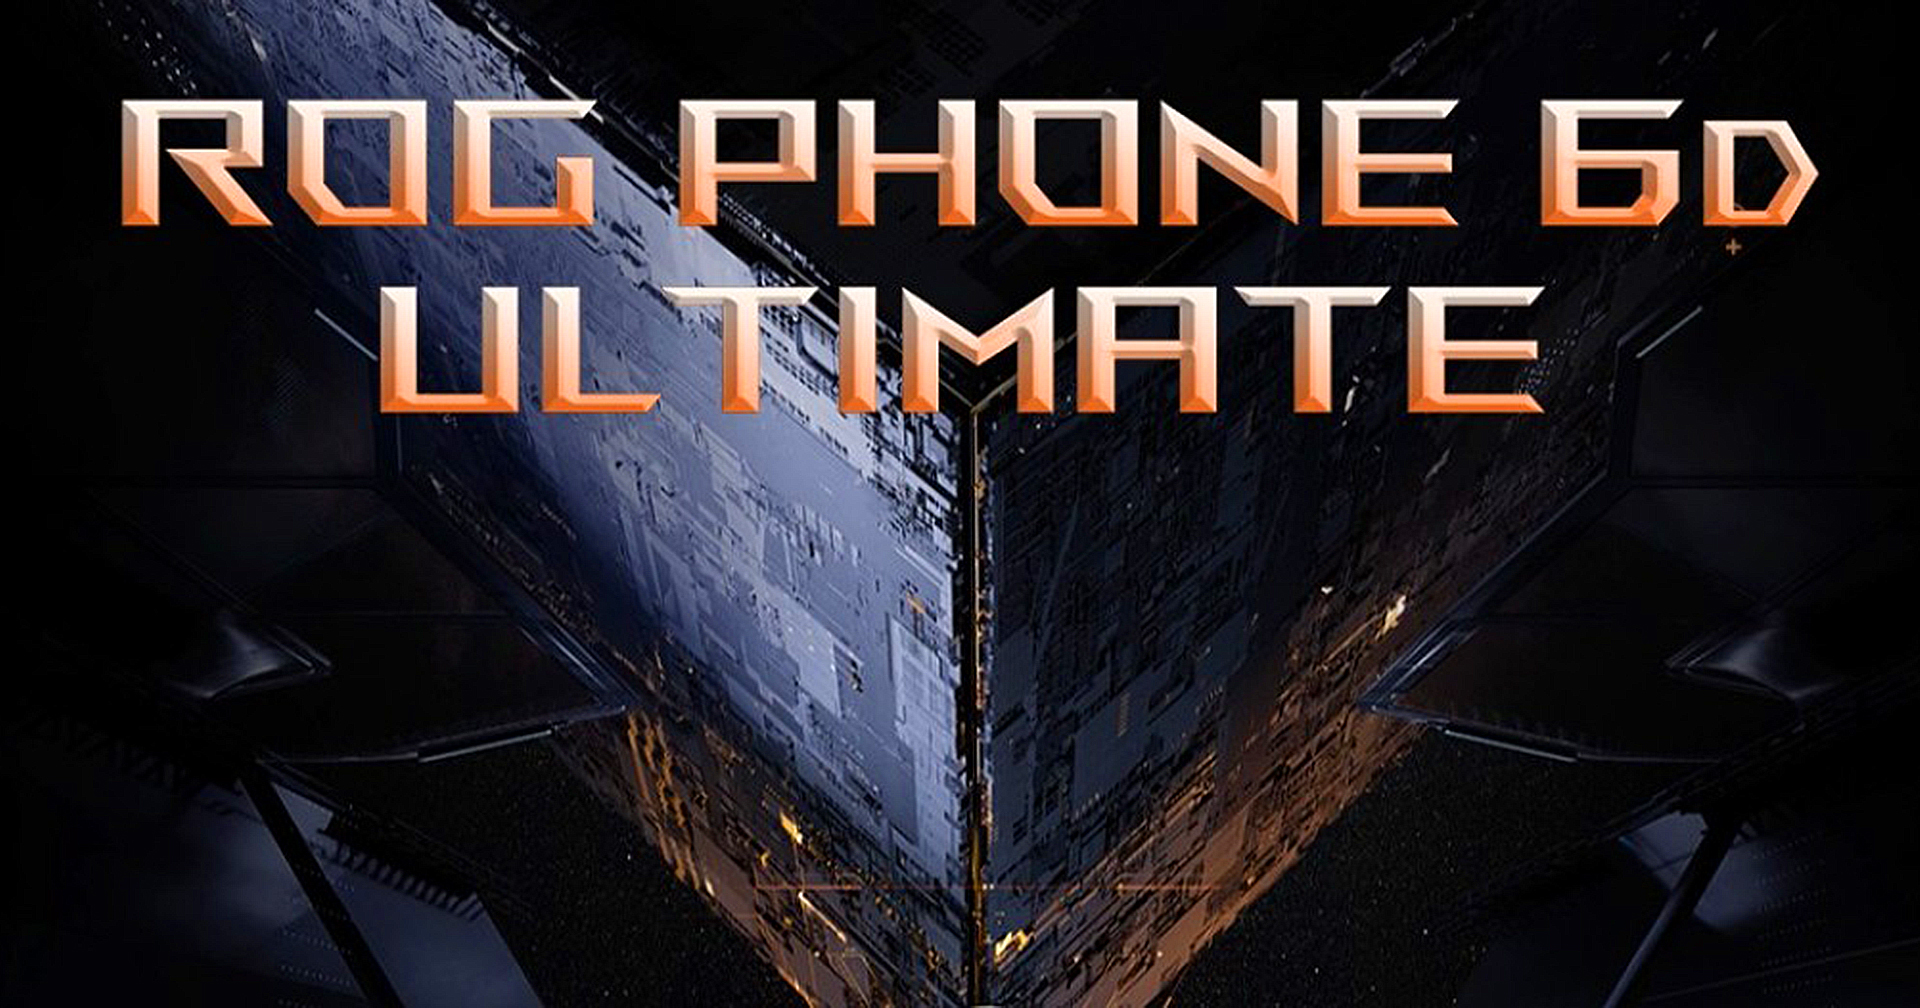 ASUS ROG Phone 6D Ultimate จะเปิดตัวพร้อมชิป Dimensity 9000+ ในวันที่ 19 ก.ย. นี้